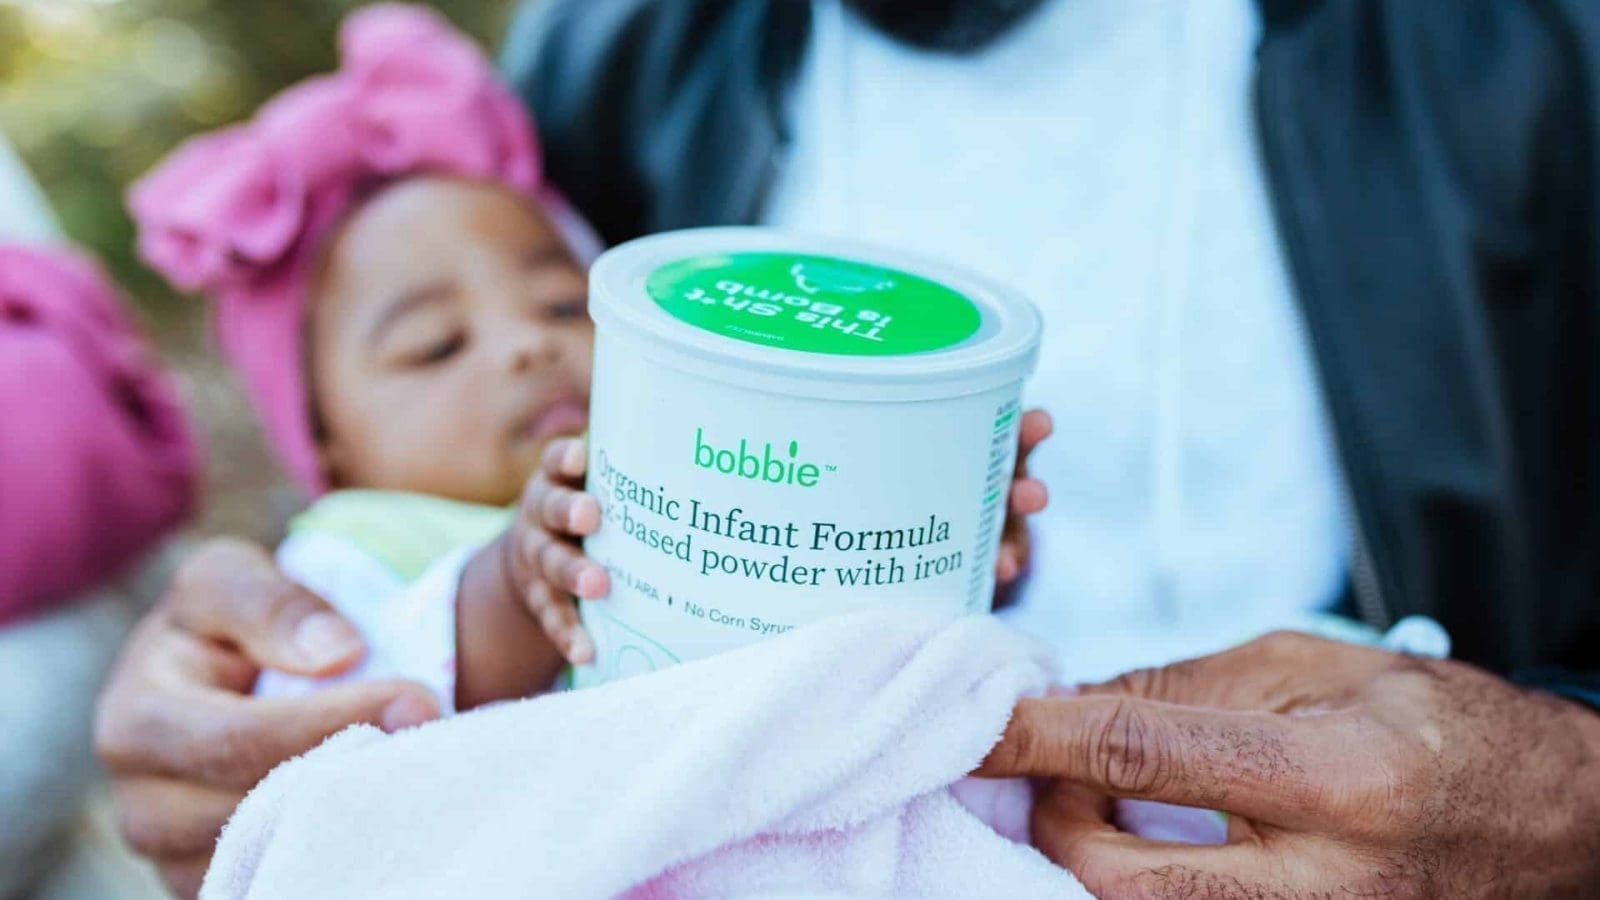 US based infant formula processor Bobbie acquires Nature’s One